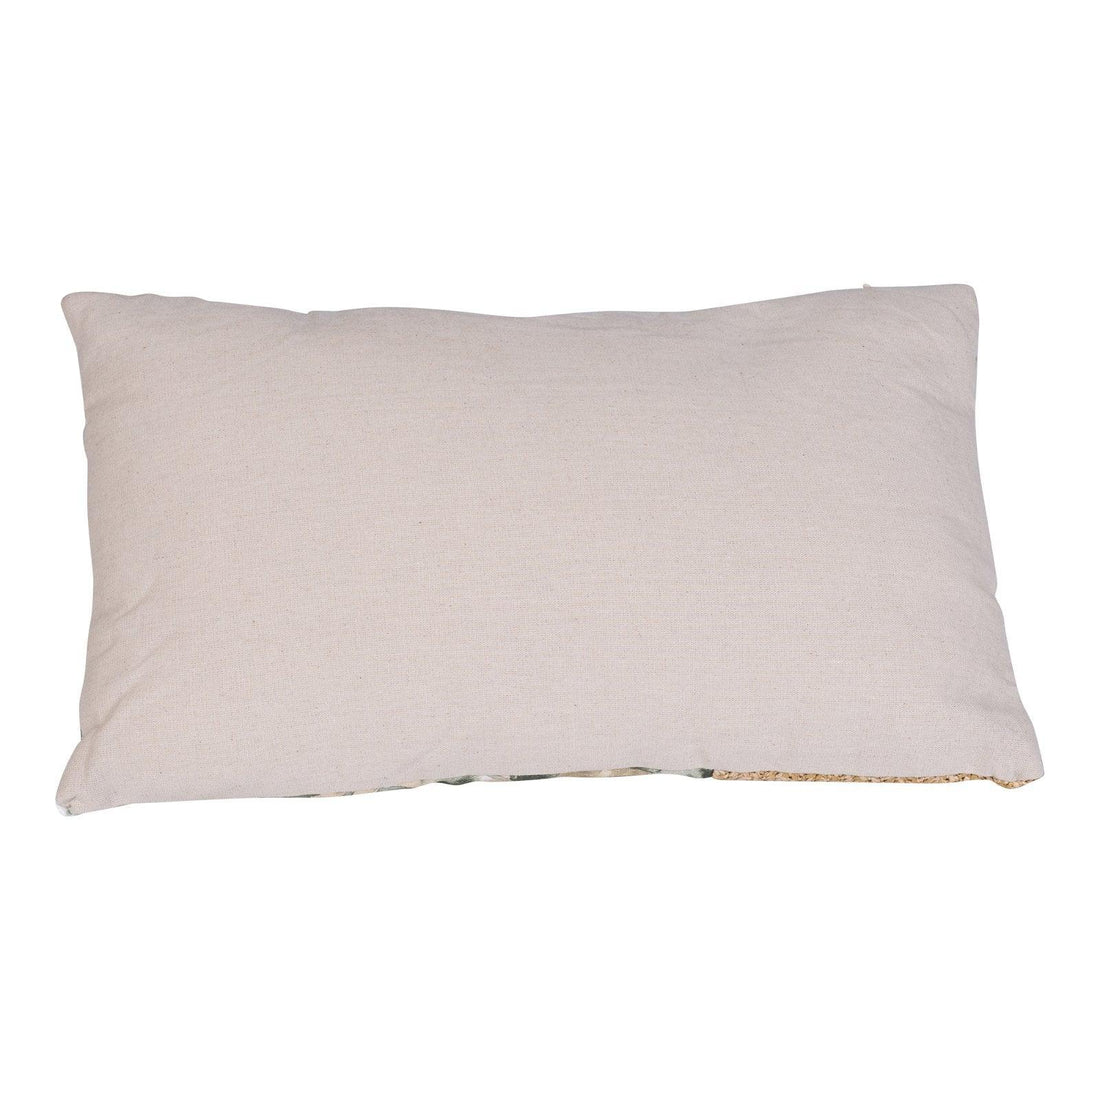 Daisy Leaf Print Scatter Cushion 49cm - £27.99 - Throw Pillows 